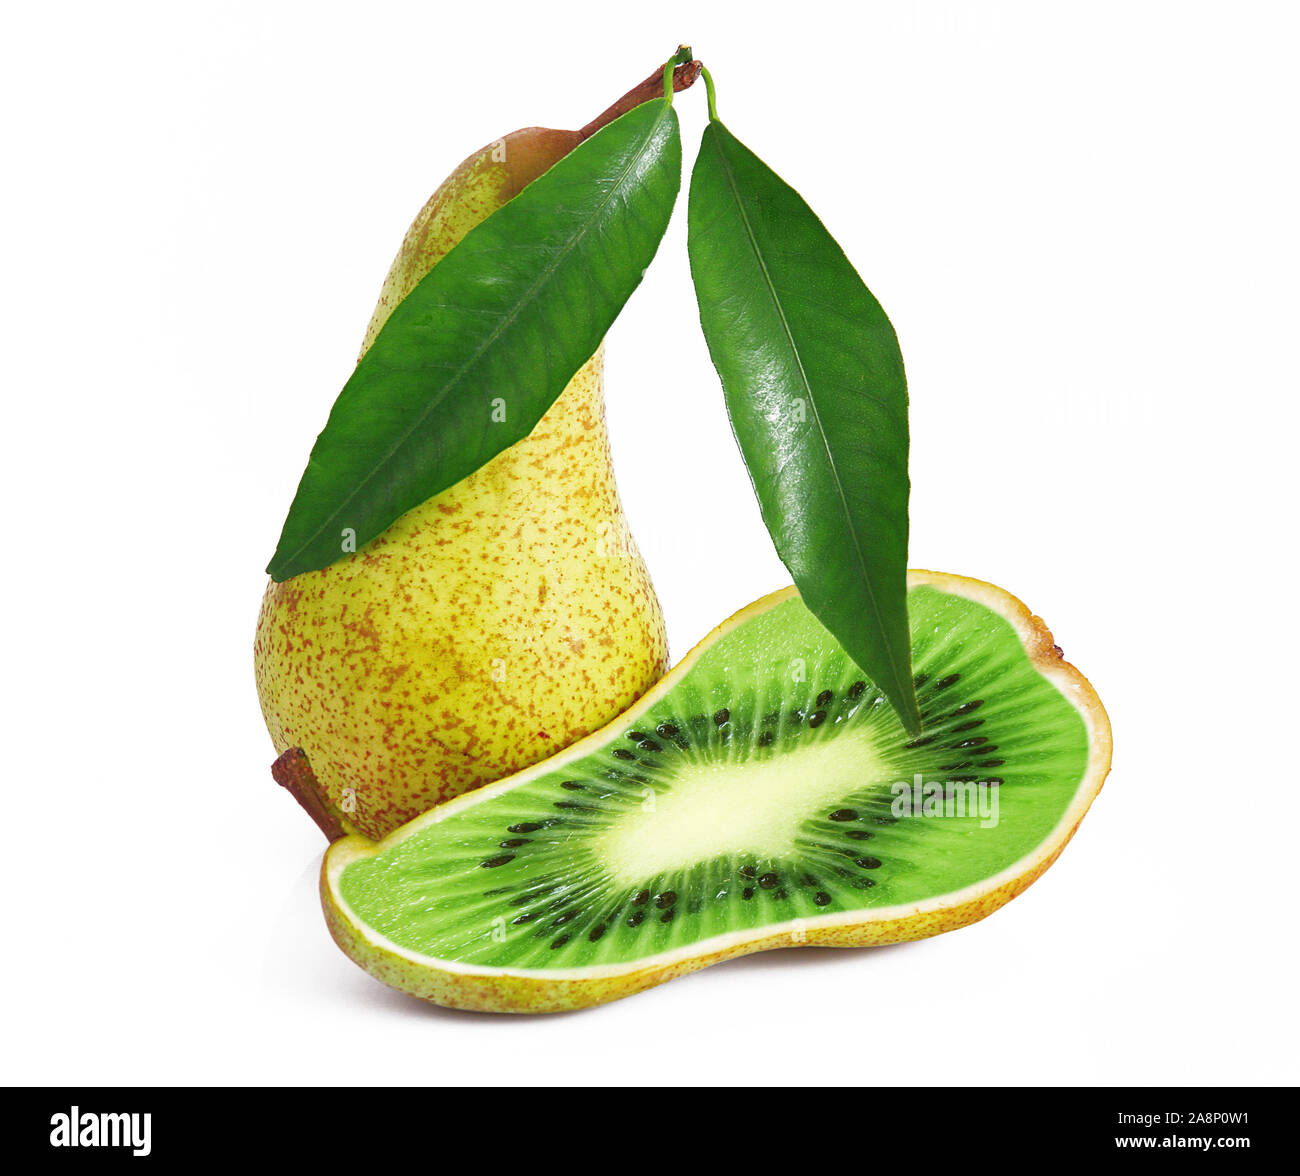 crazy fruits green - HD FRUIT MACHINES - Gallery - Fruit-Emu